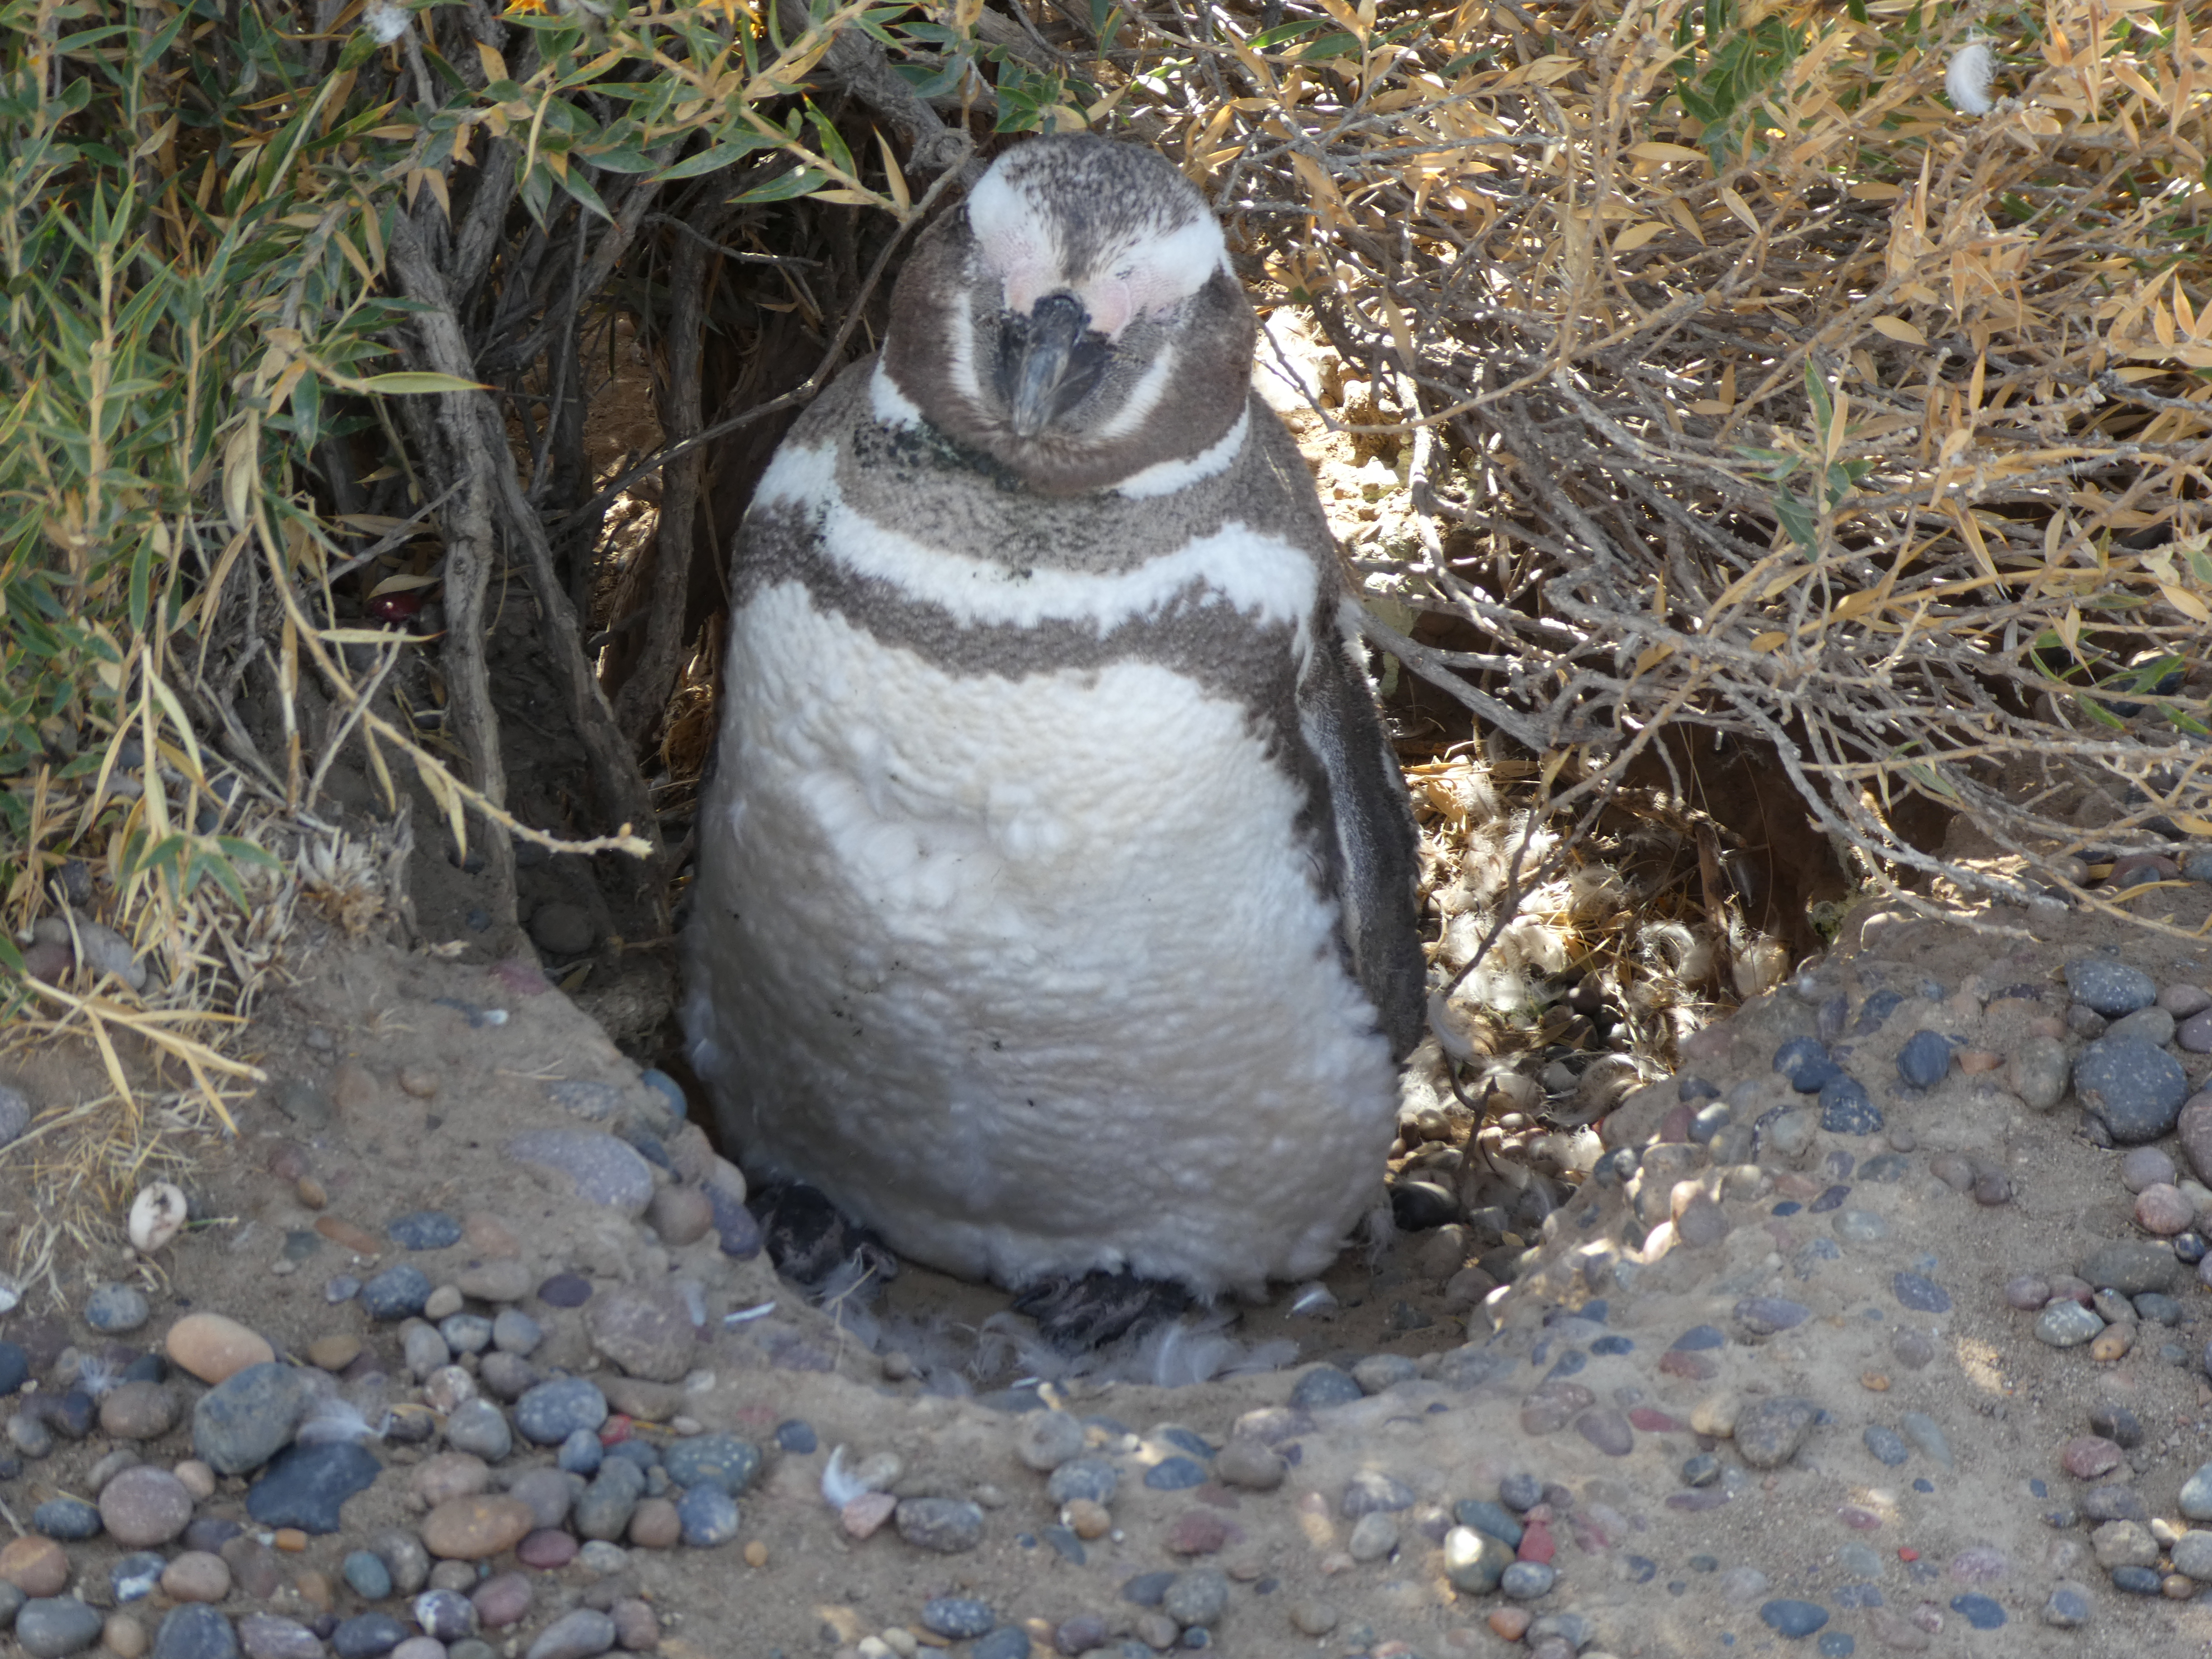 postcard from Argentina - Penguin reserve